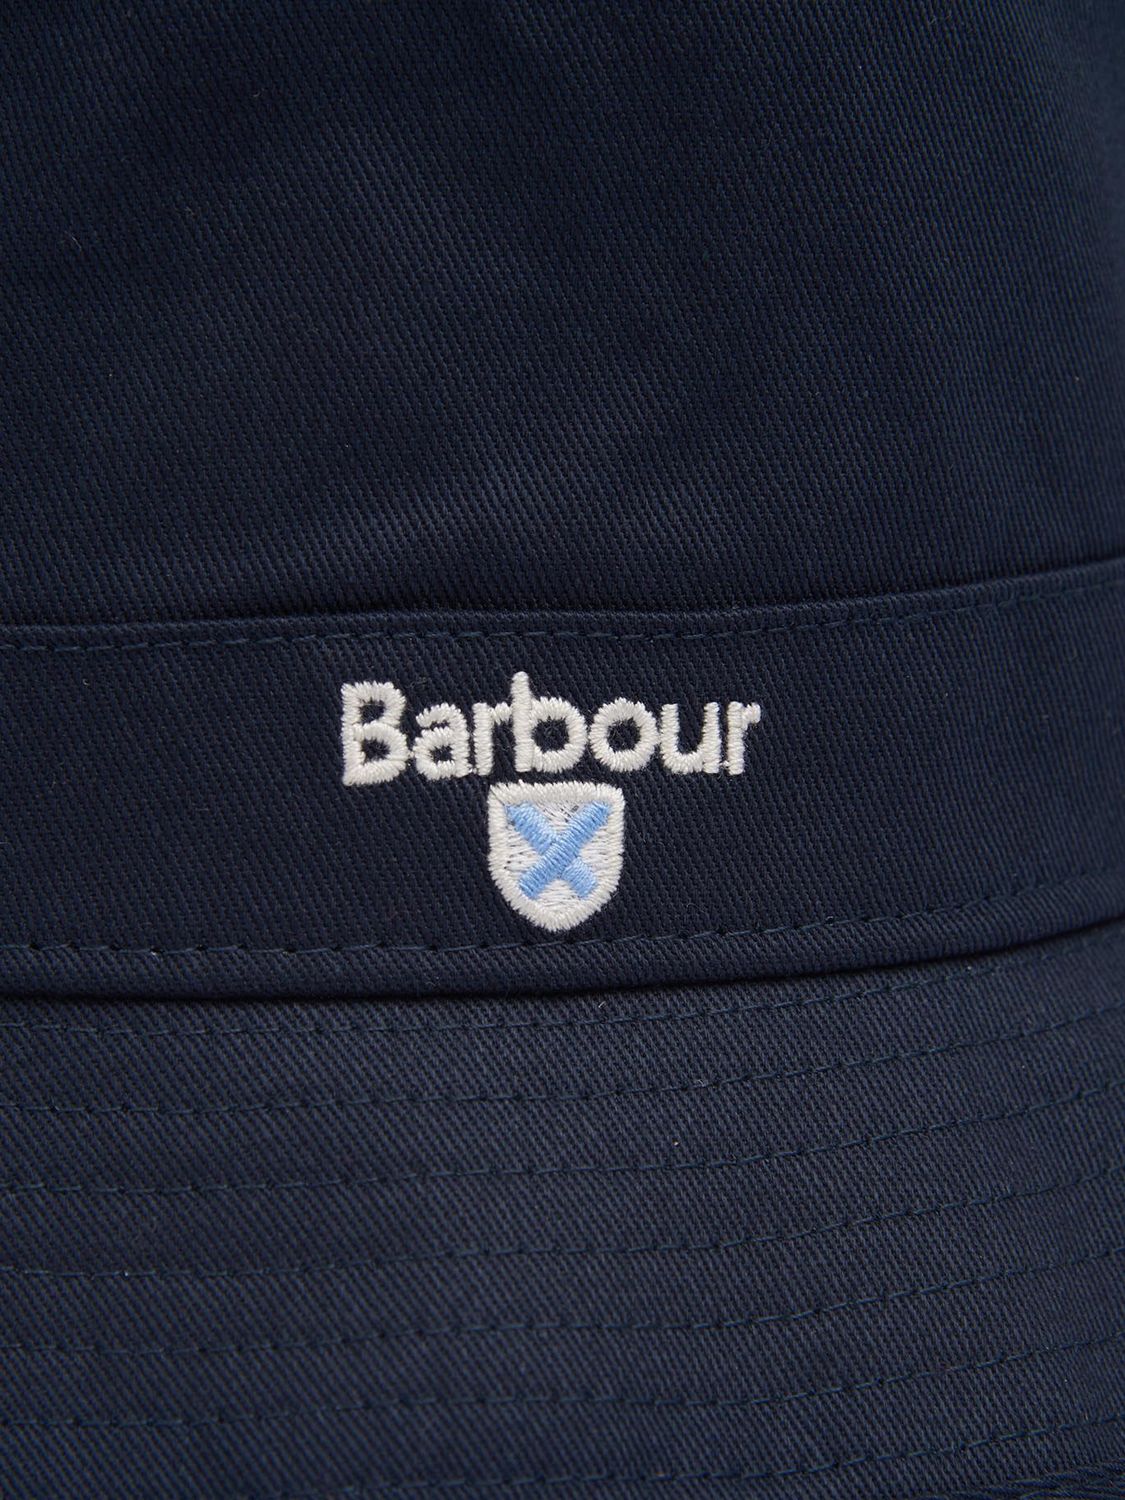 Buy Barbour Classic Bucket Hat Online at johnlewis.com